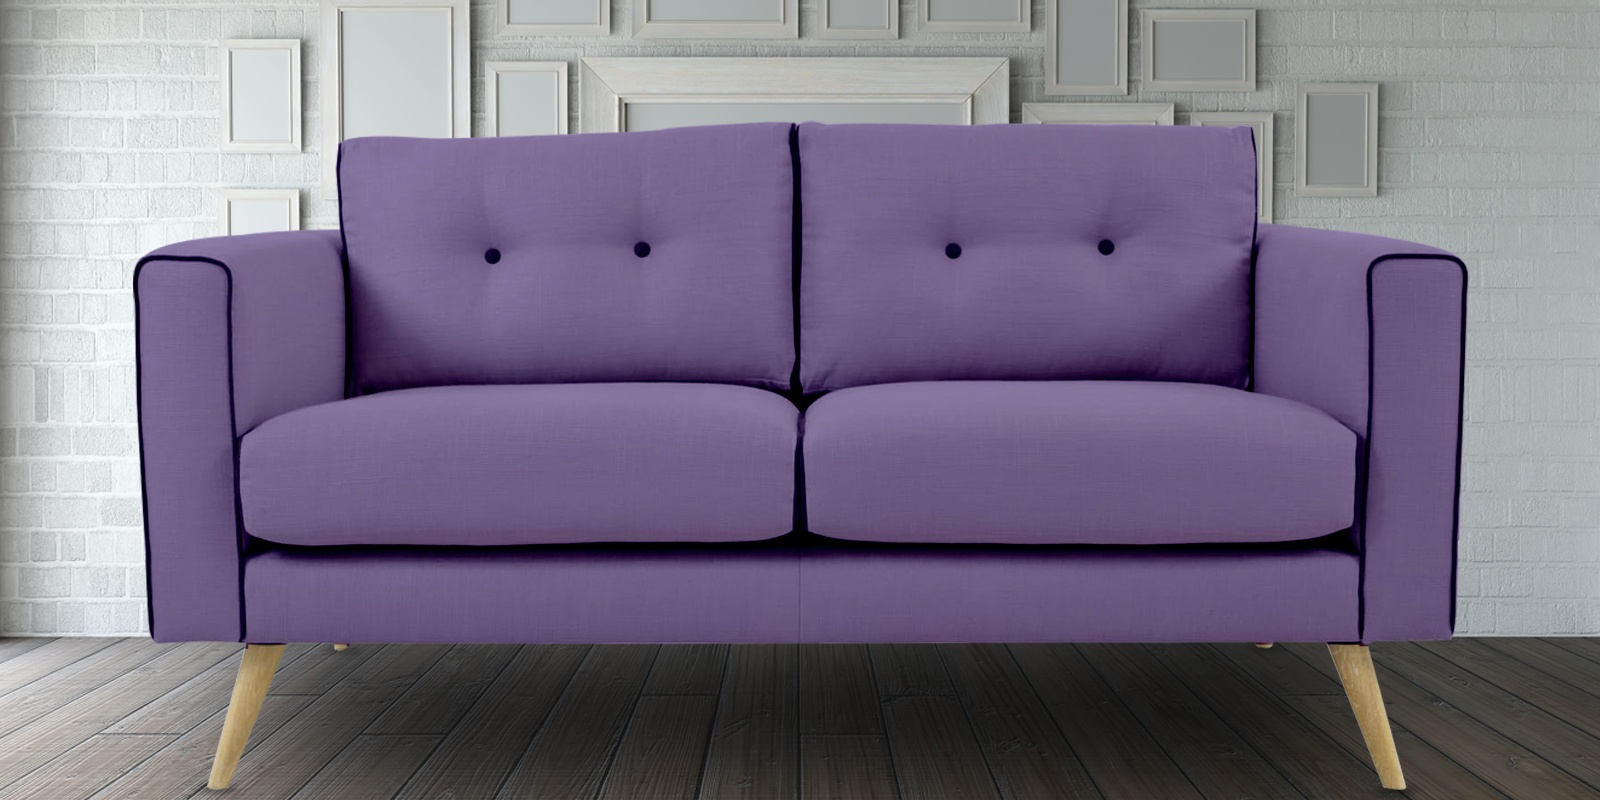 purple two seat leather sofa